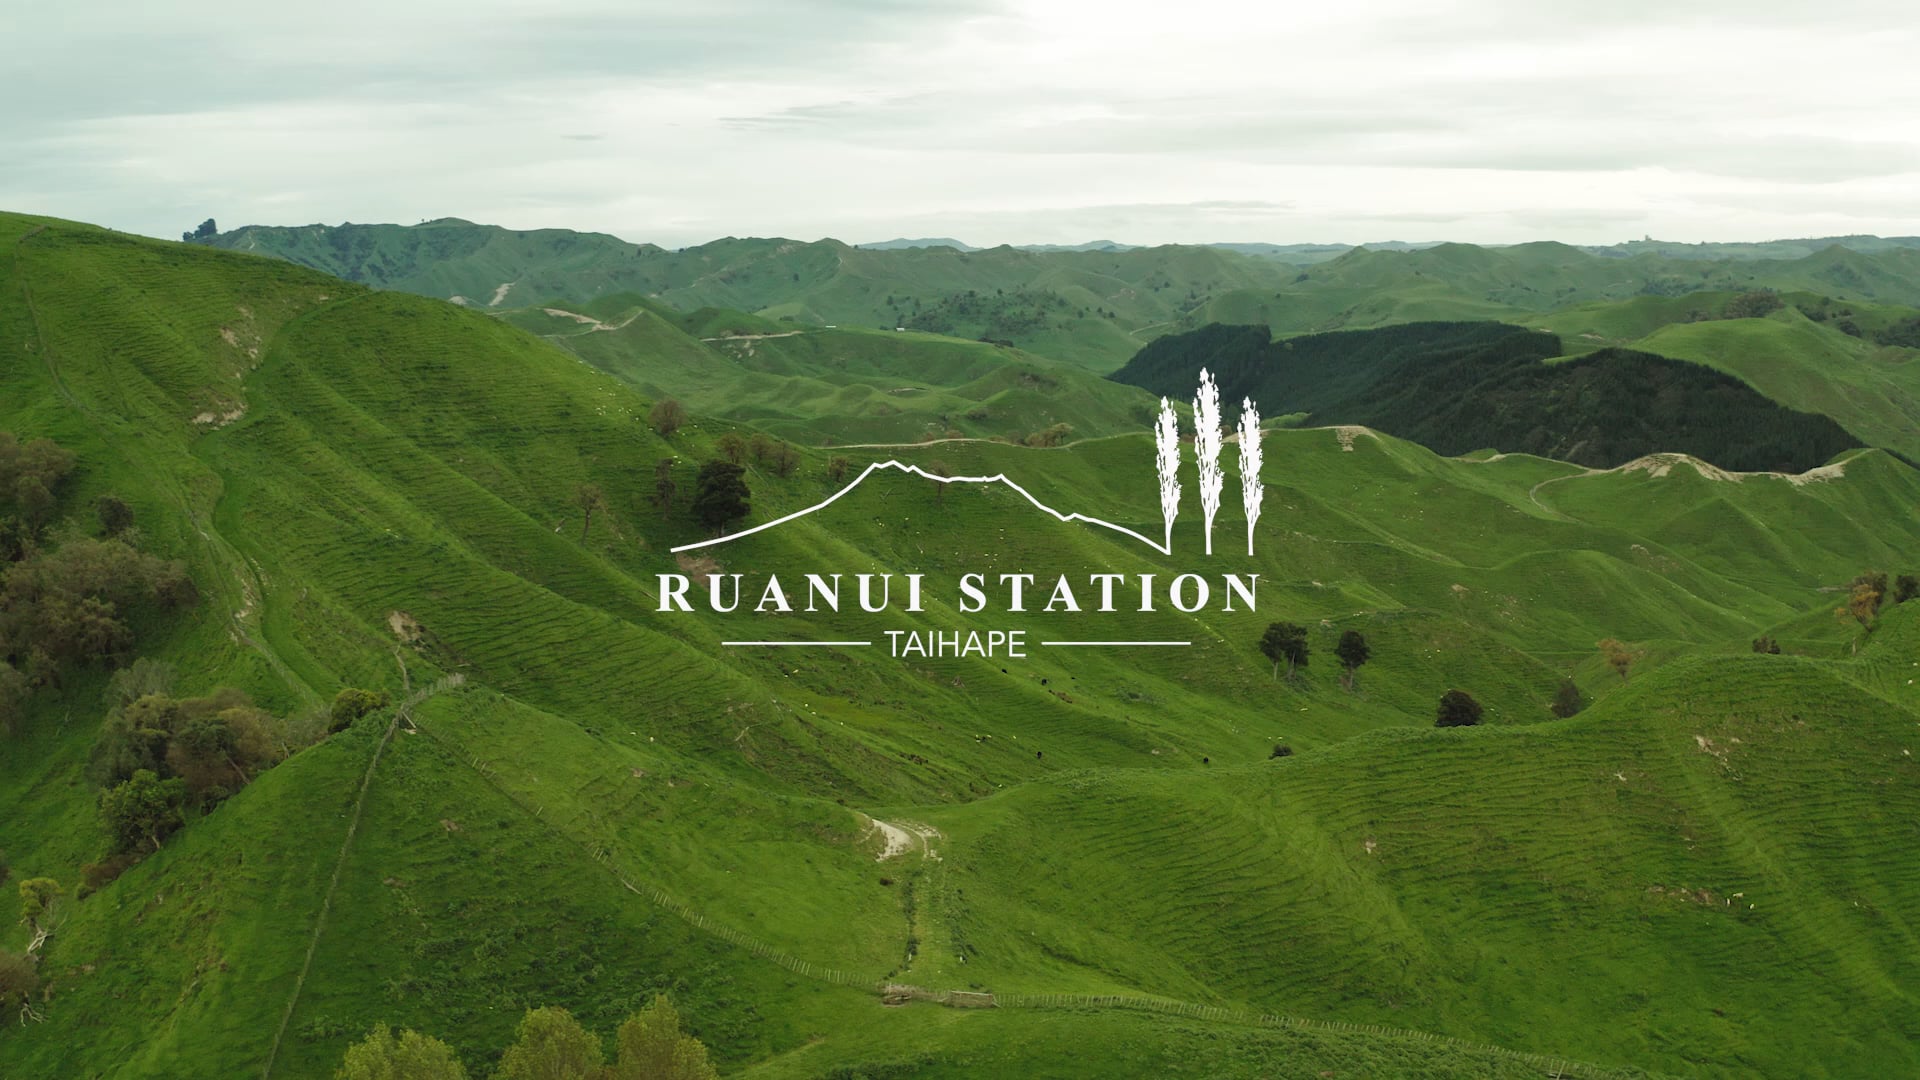 Ruanui Station - Full story